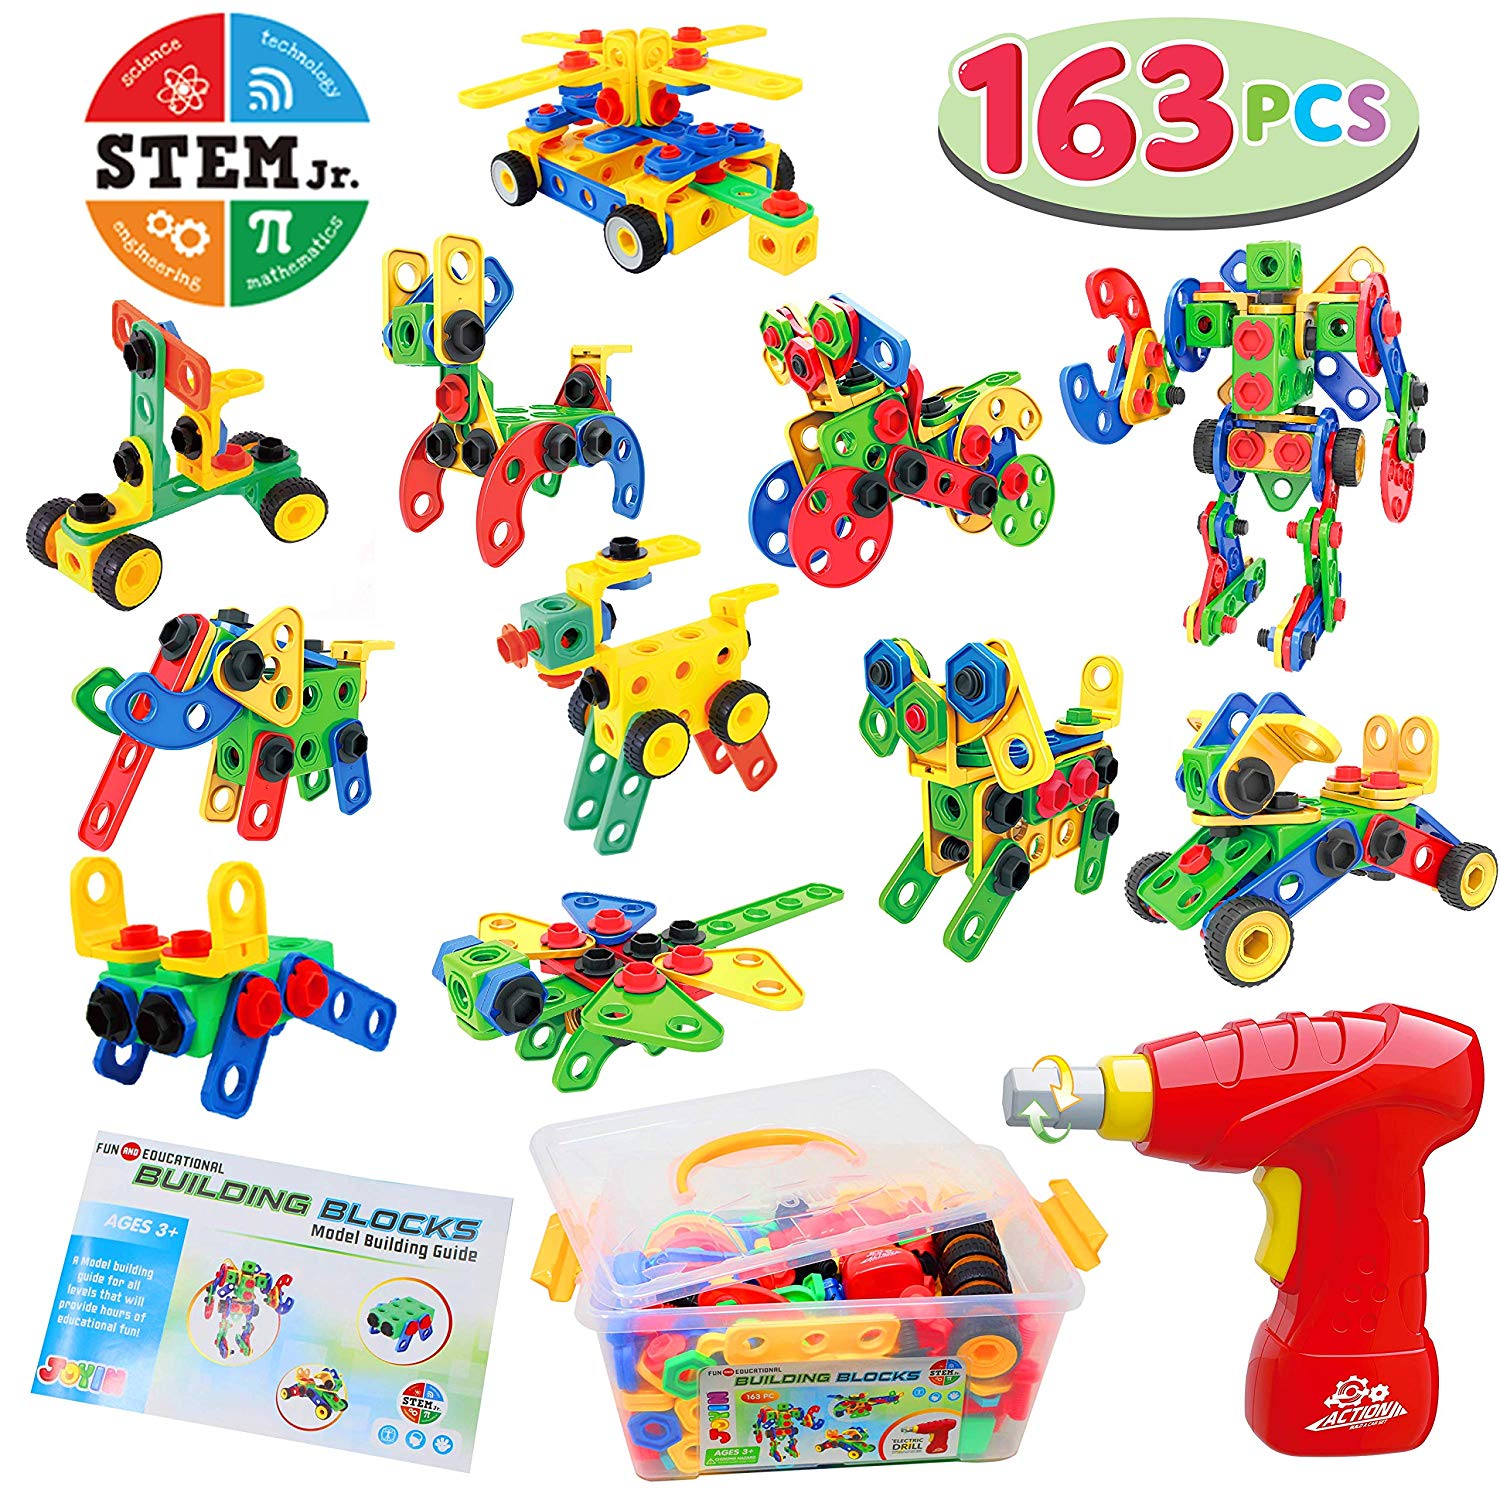 Educational Stem Thinker Toy Learning Set